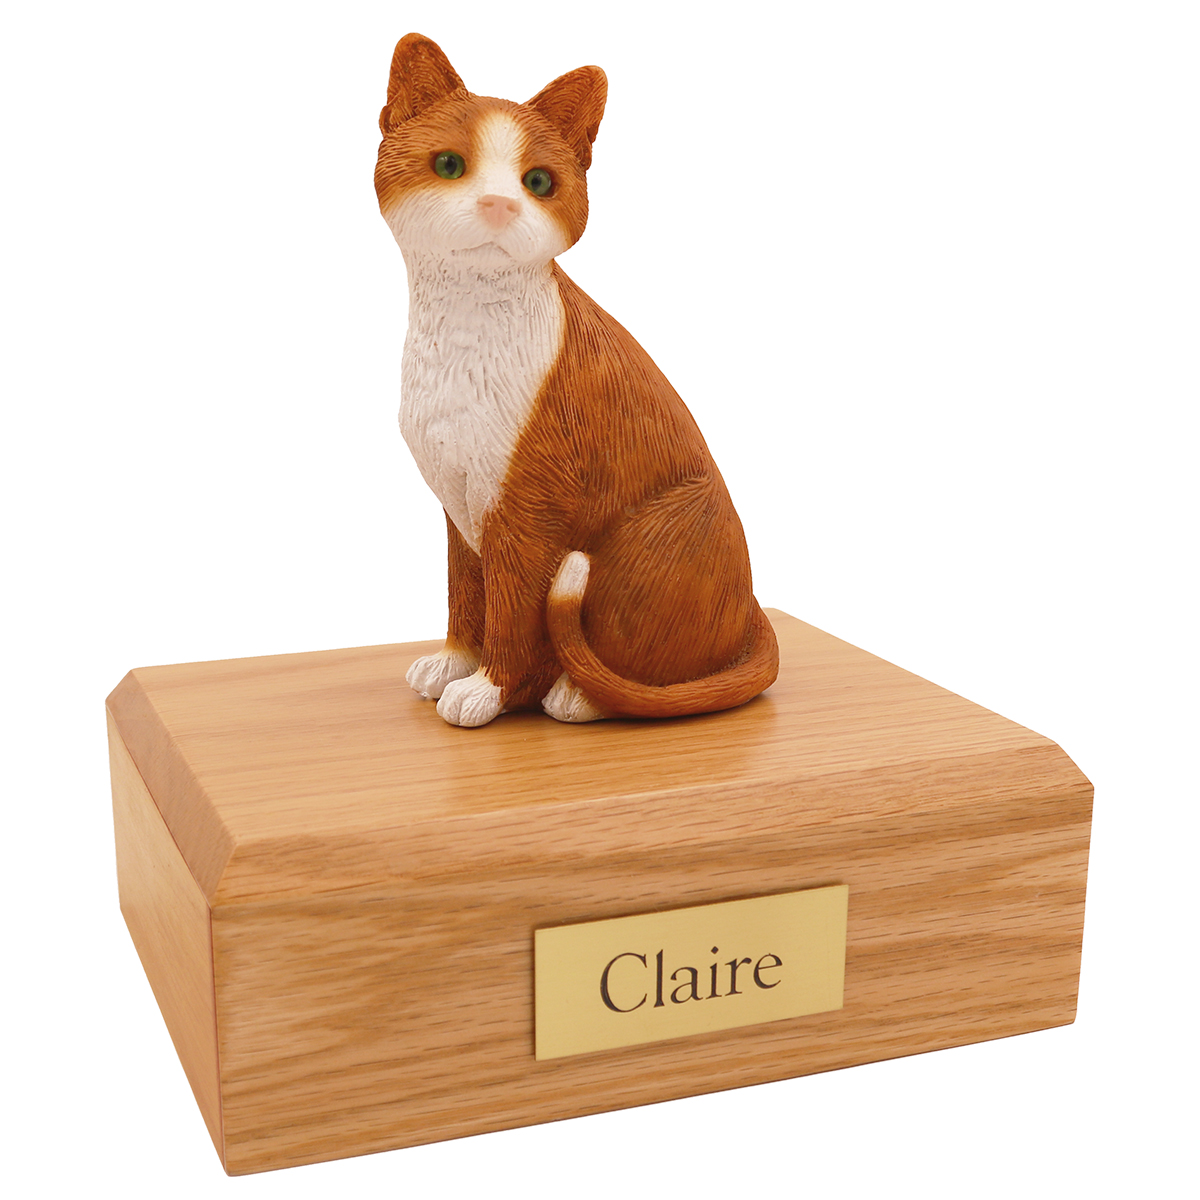 Cat, Orange/White  - Figurine Urn